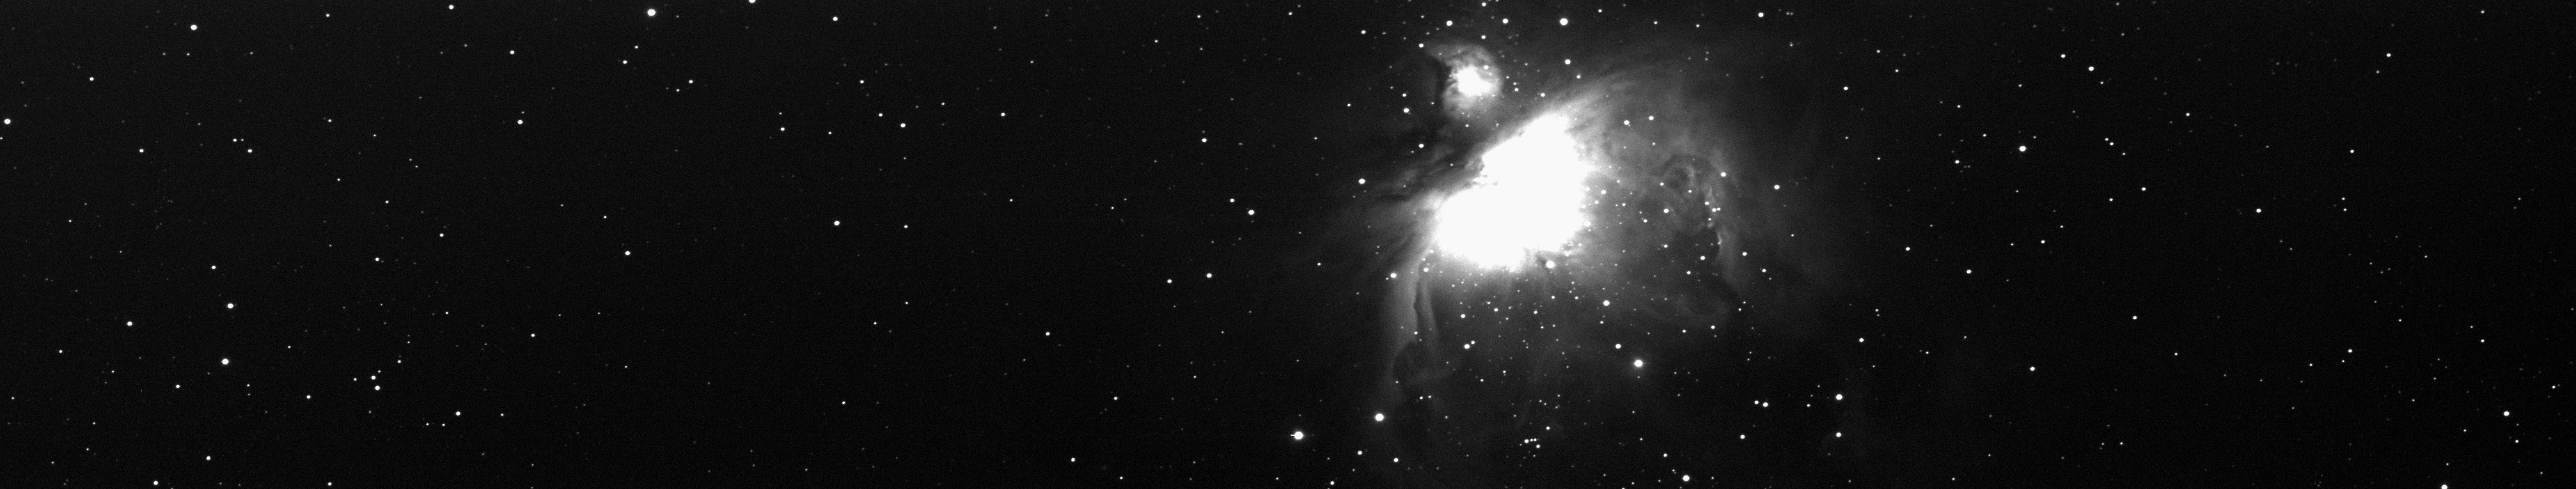 drift scan image of M42